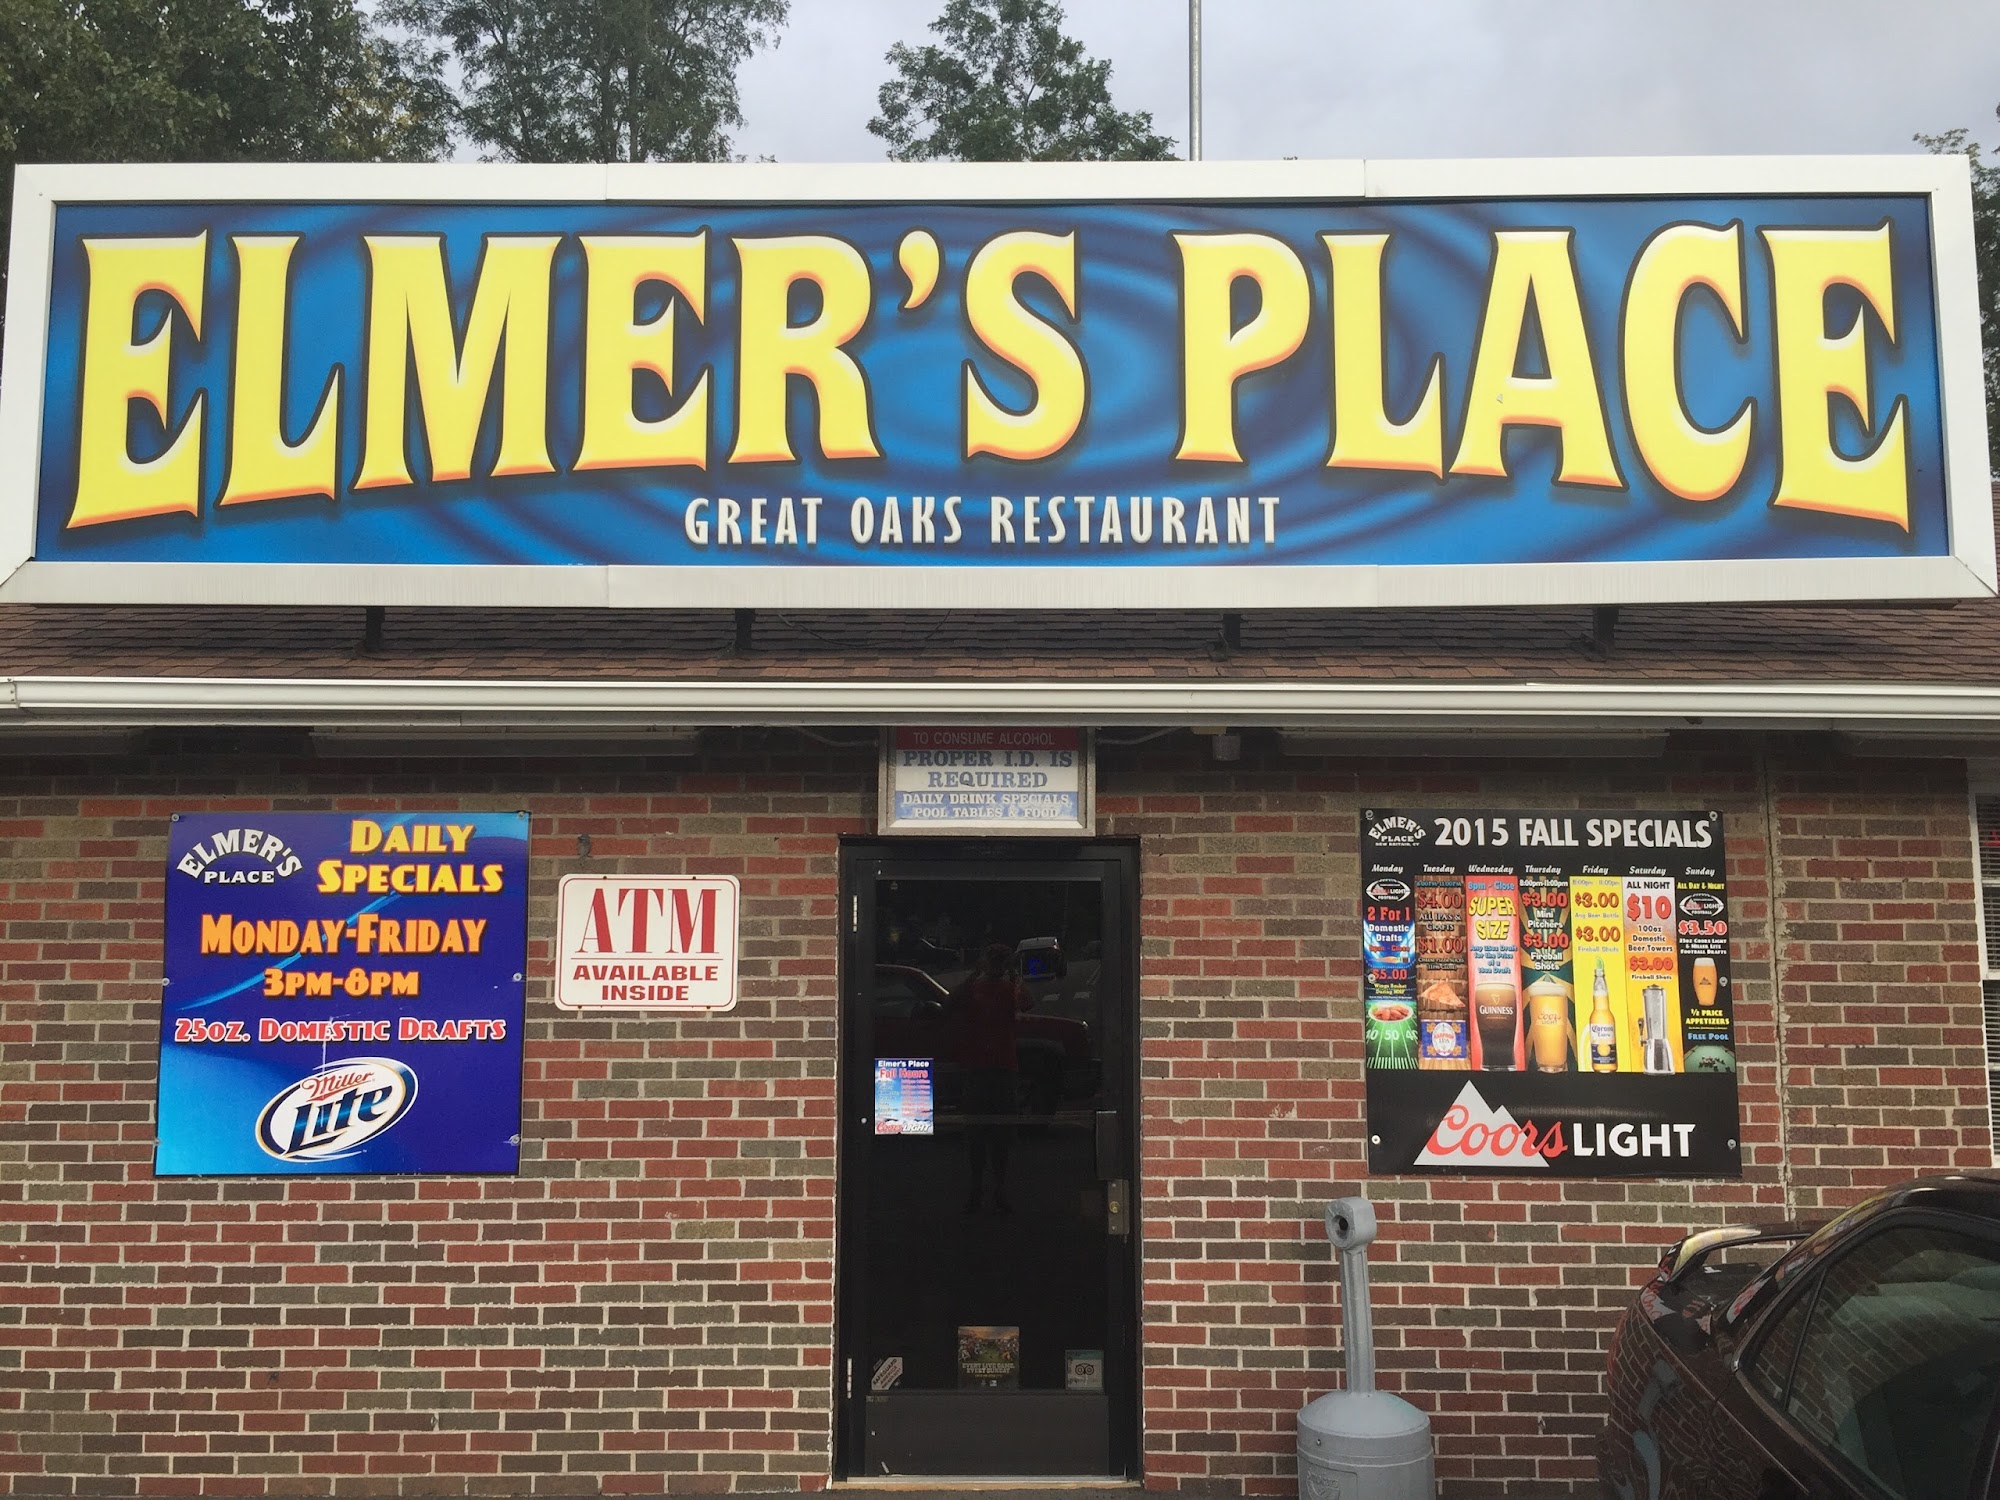 Elmer's Place & Great Oak's Restaurant